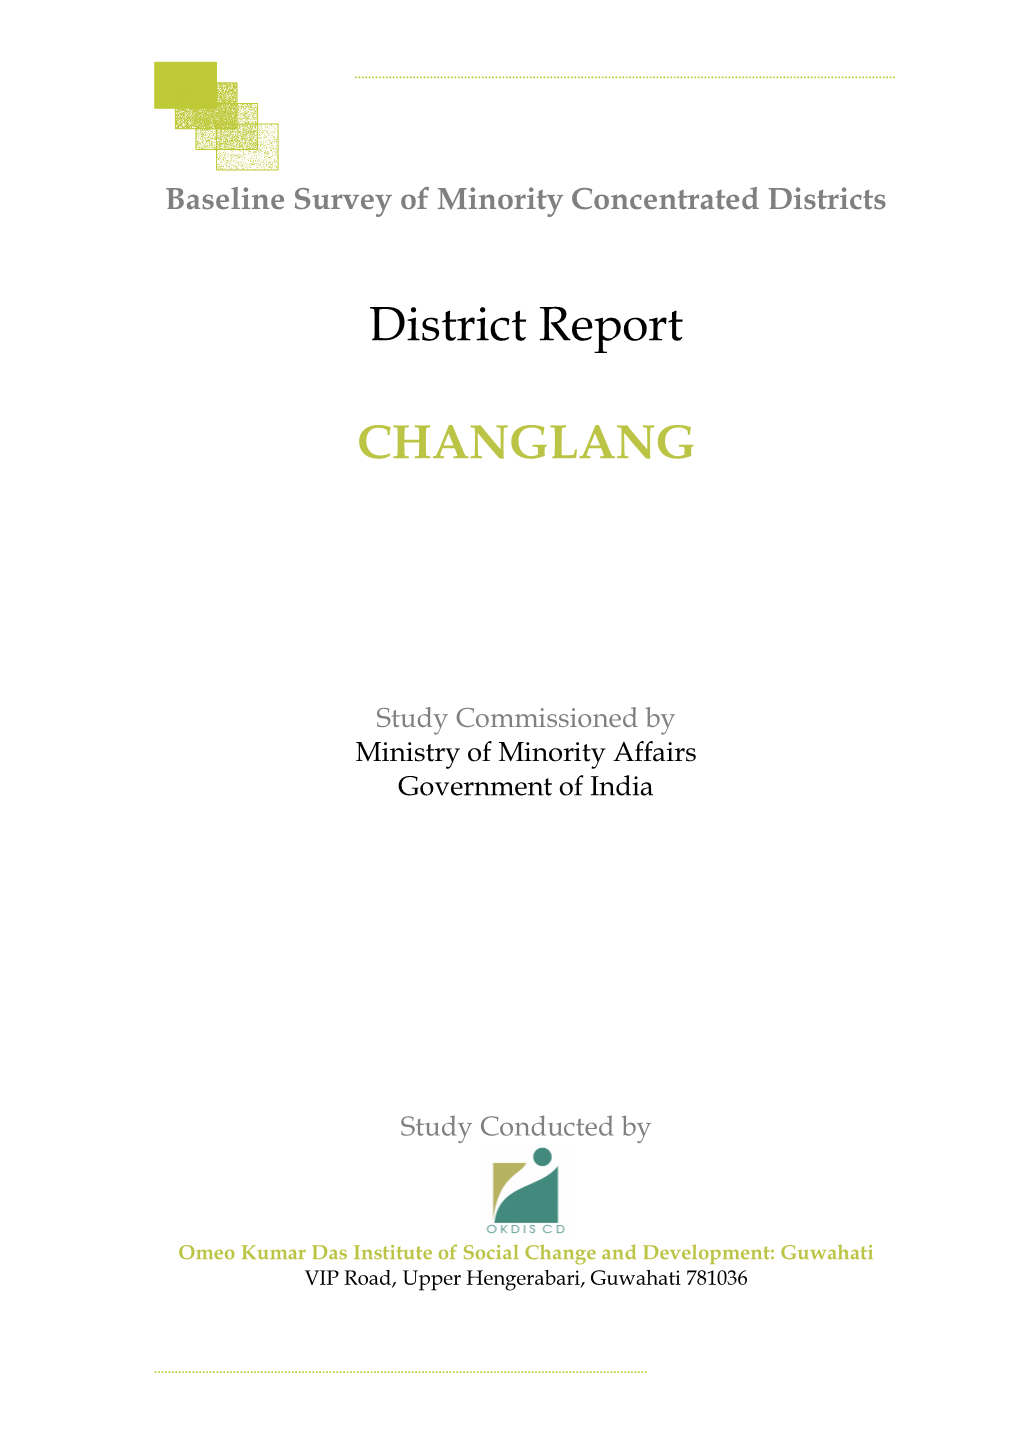 District Report CHANGLANG